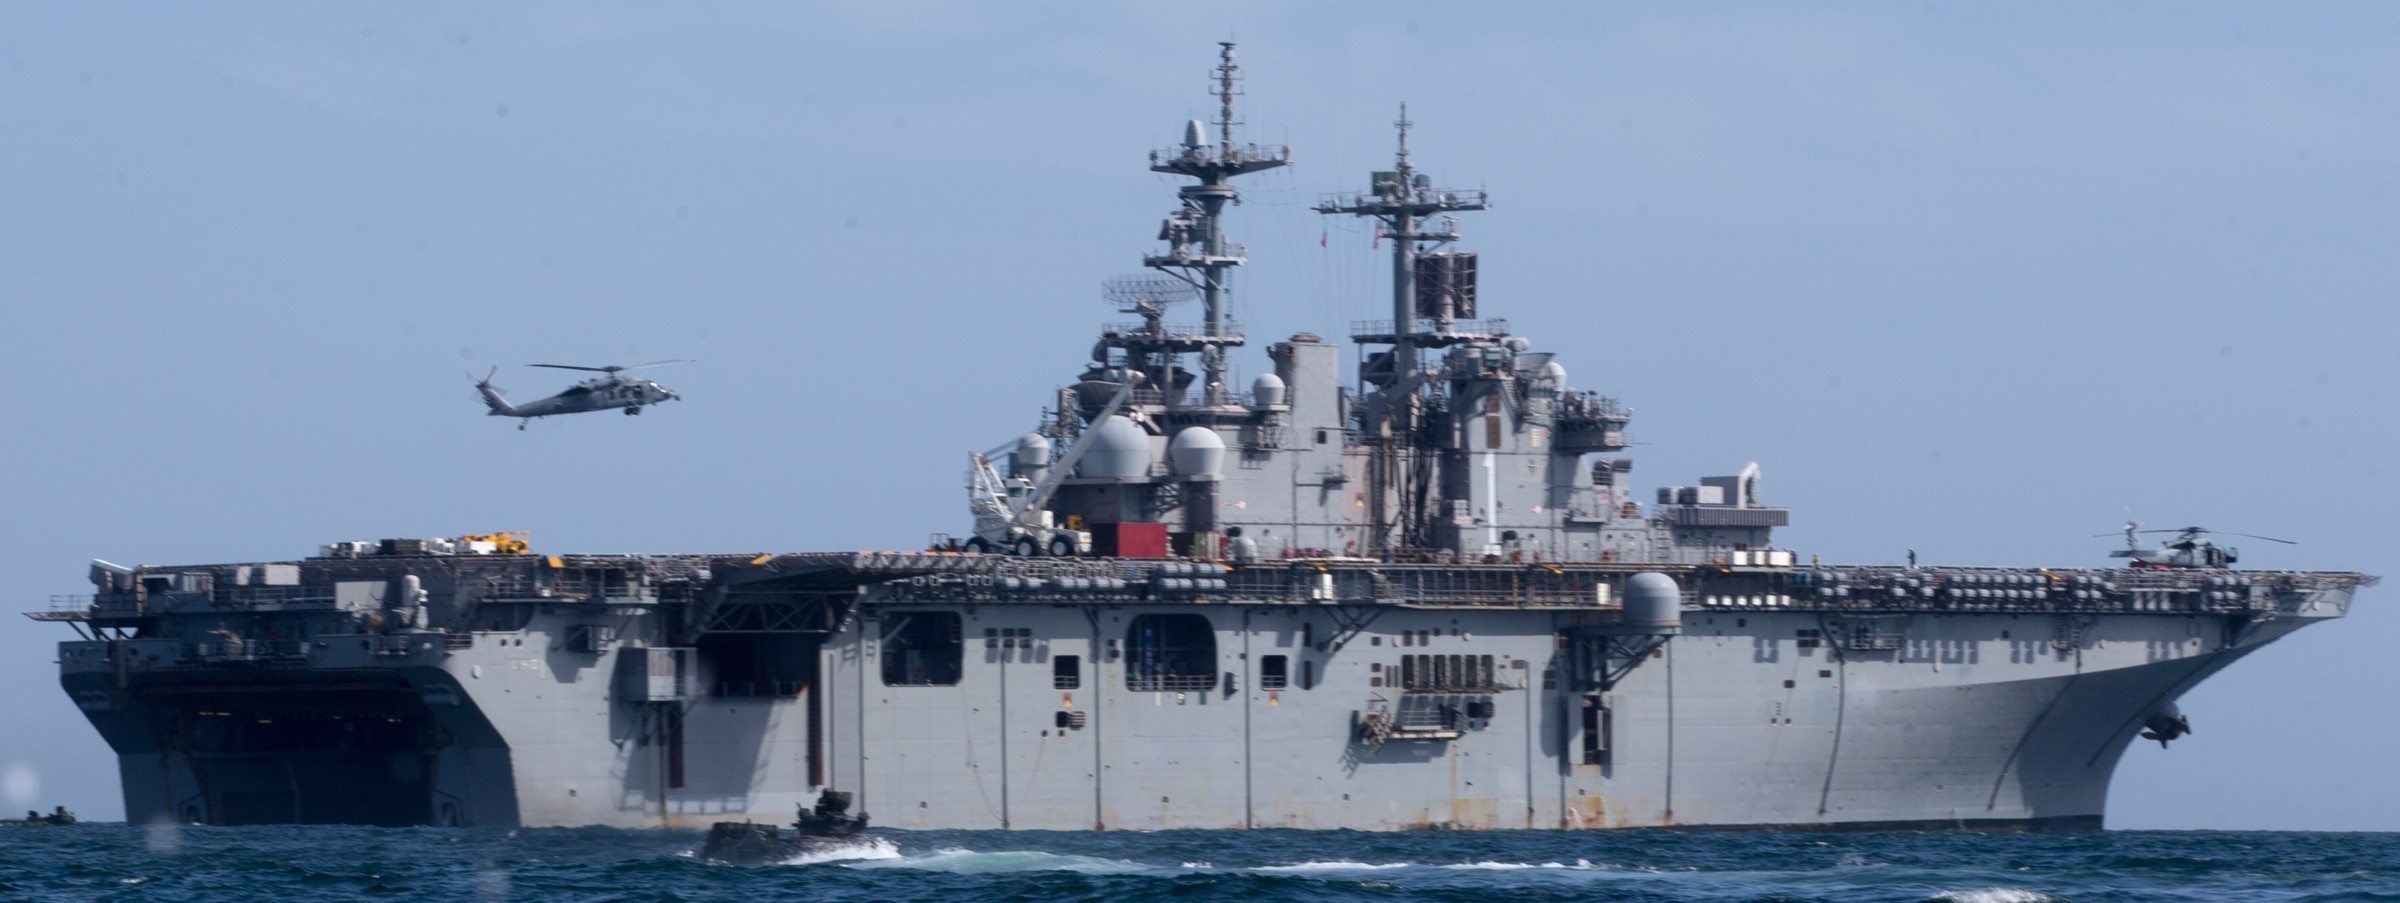 lhd-1 uss wasp amphibious assault landing ship dock helicopter us navy 162